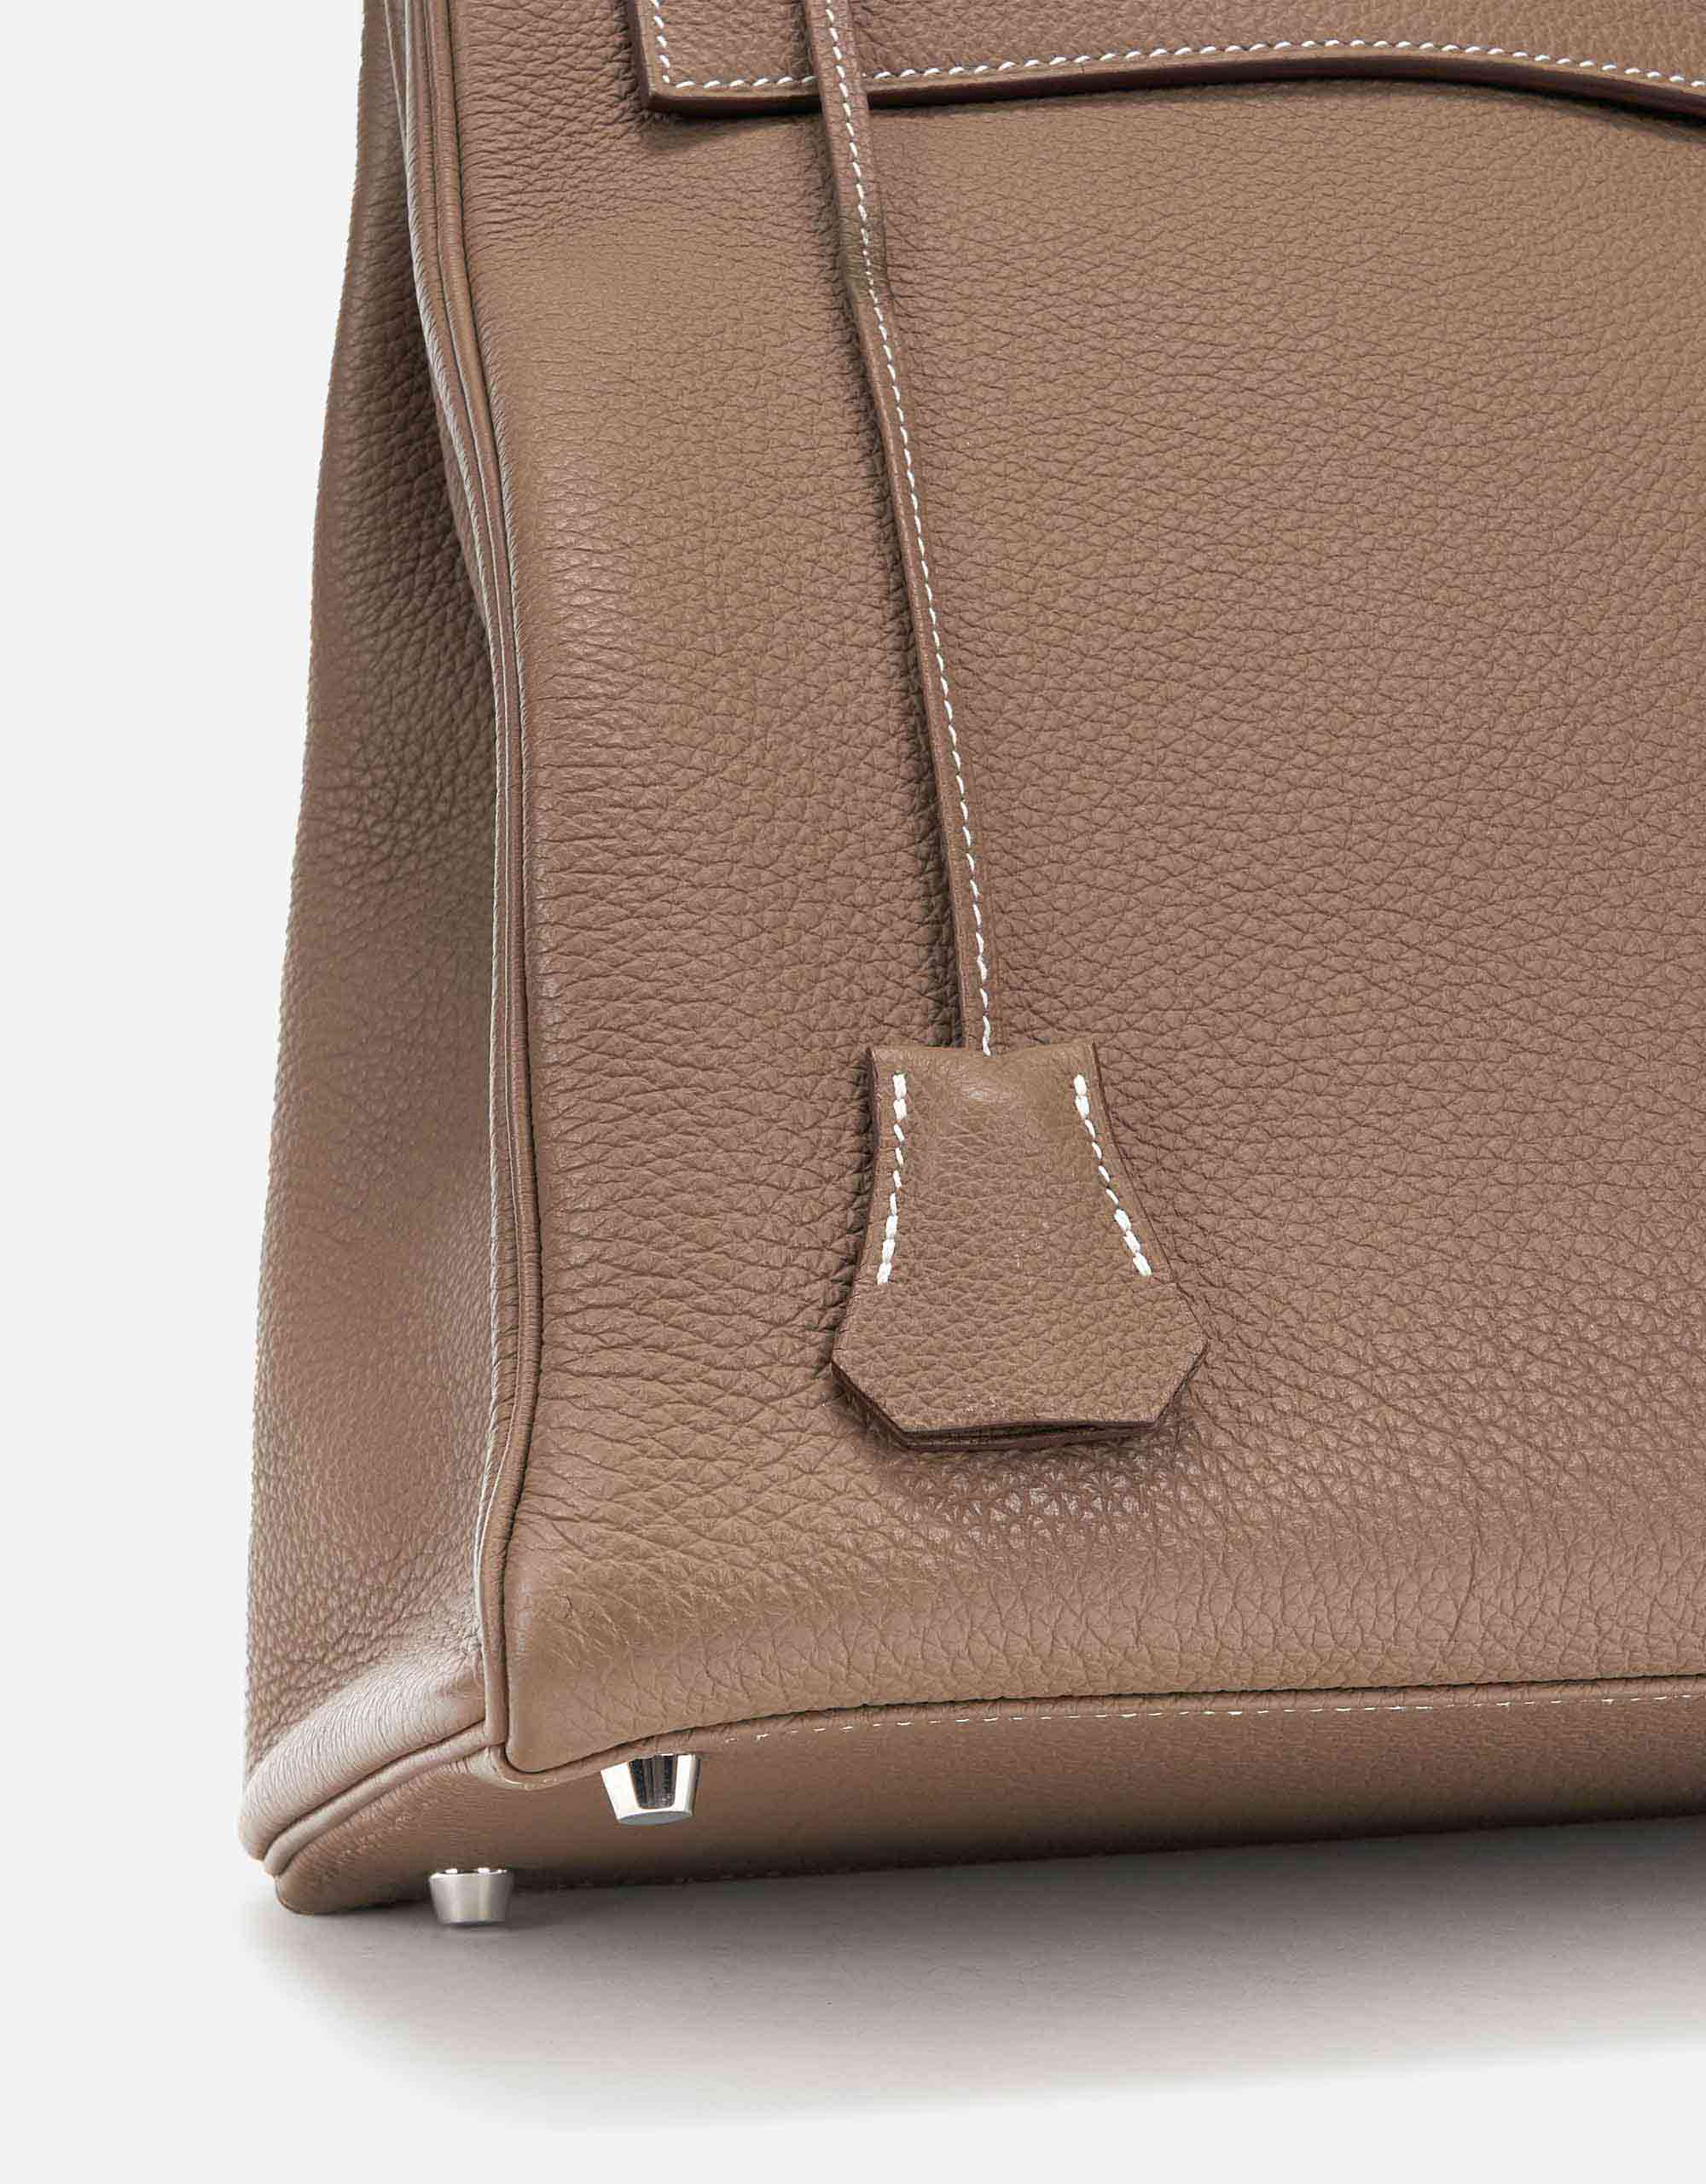 Nice Hermès Kelly 40 bag in beige Togo leather